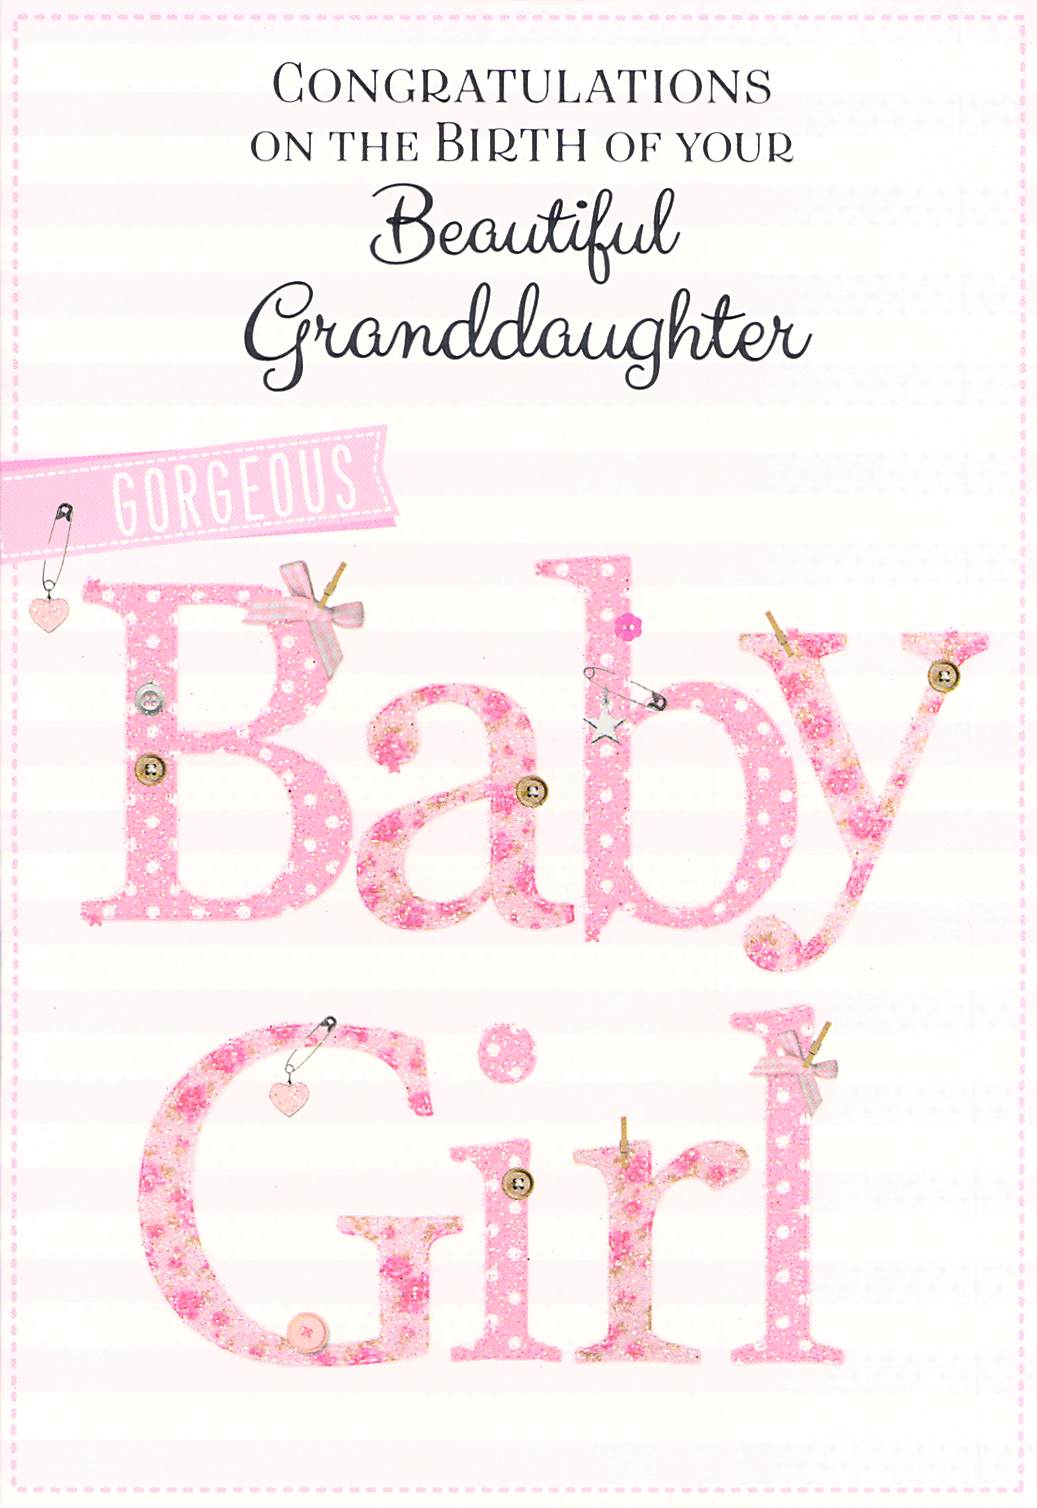 Birth (Granddaughter) - Greeting Card - Multi Buy - Free P&P